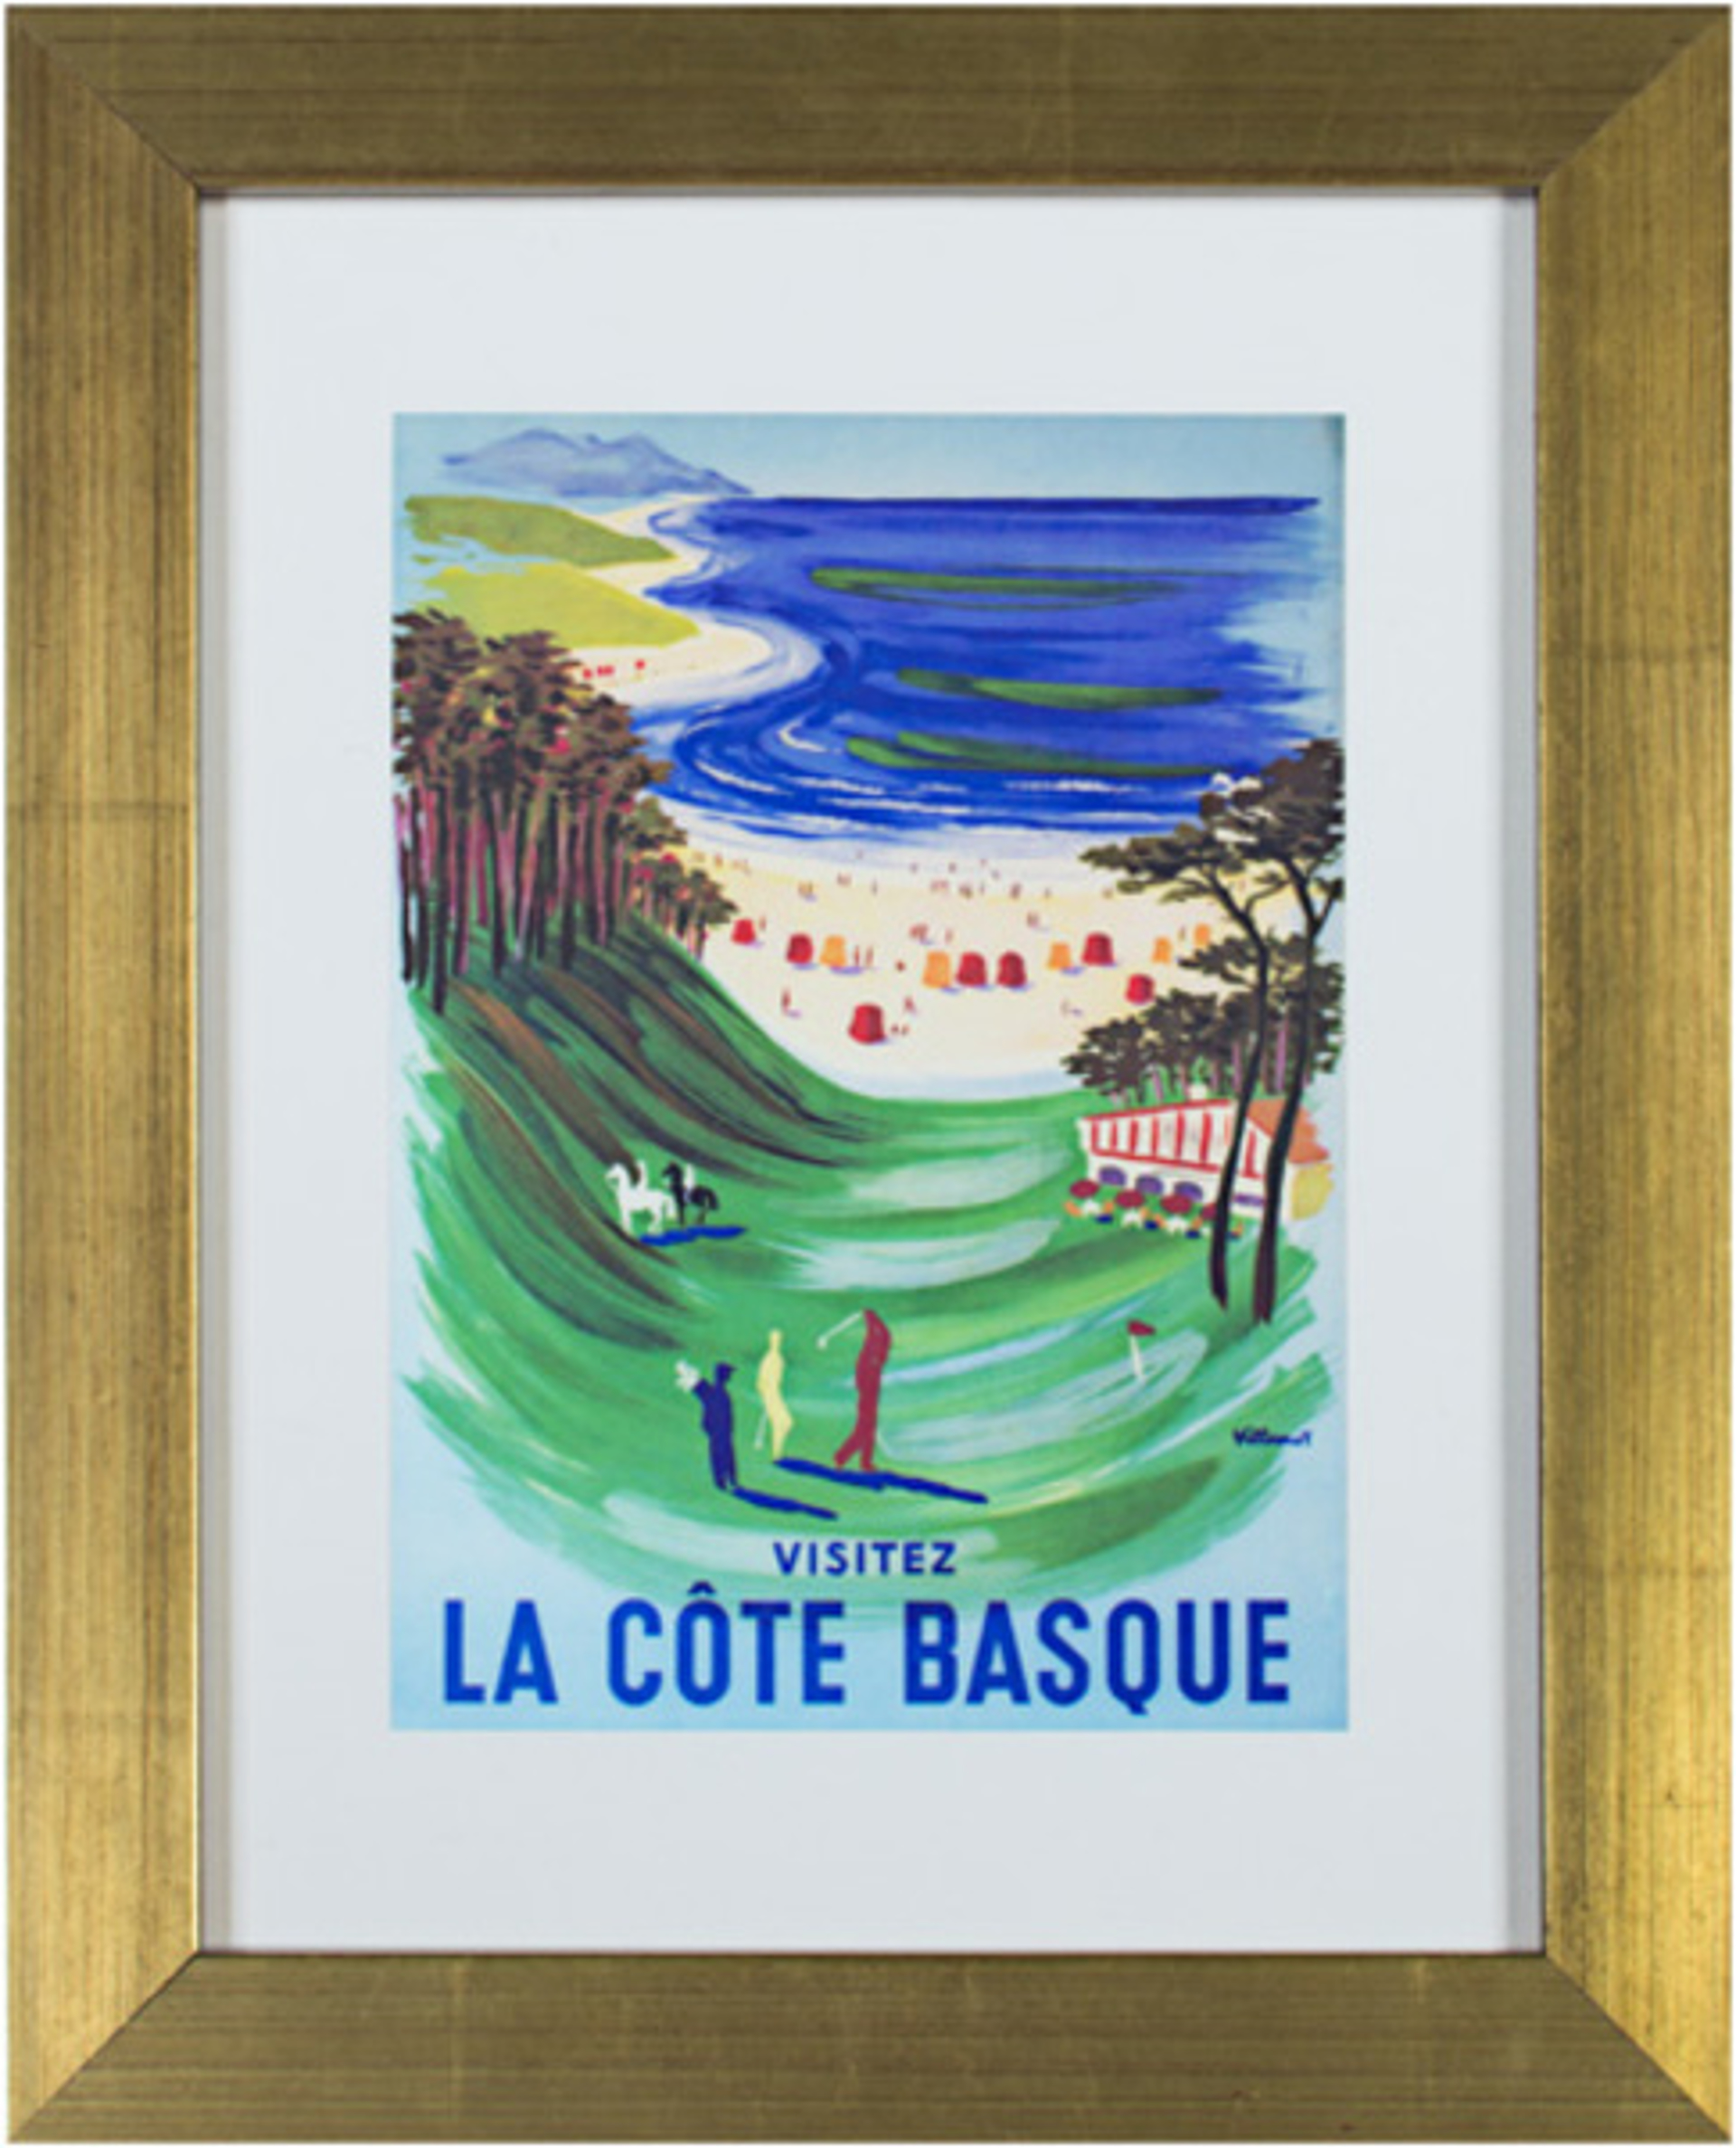 La Cote Basque by Bernard Villemot